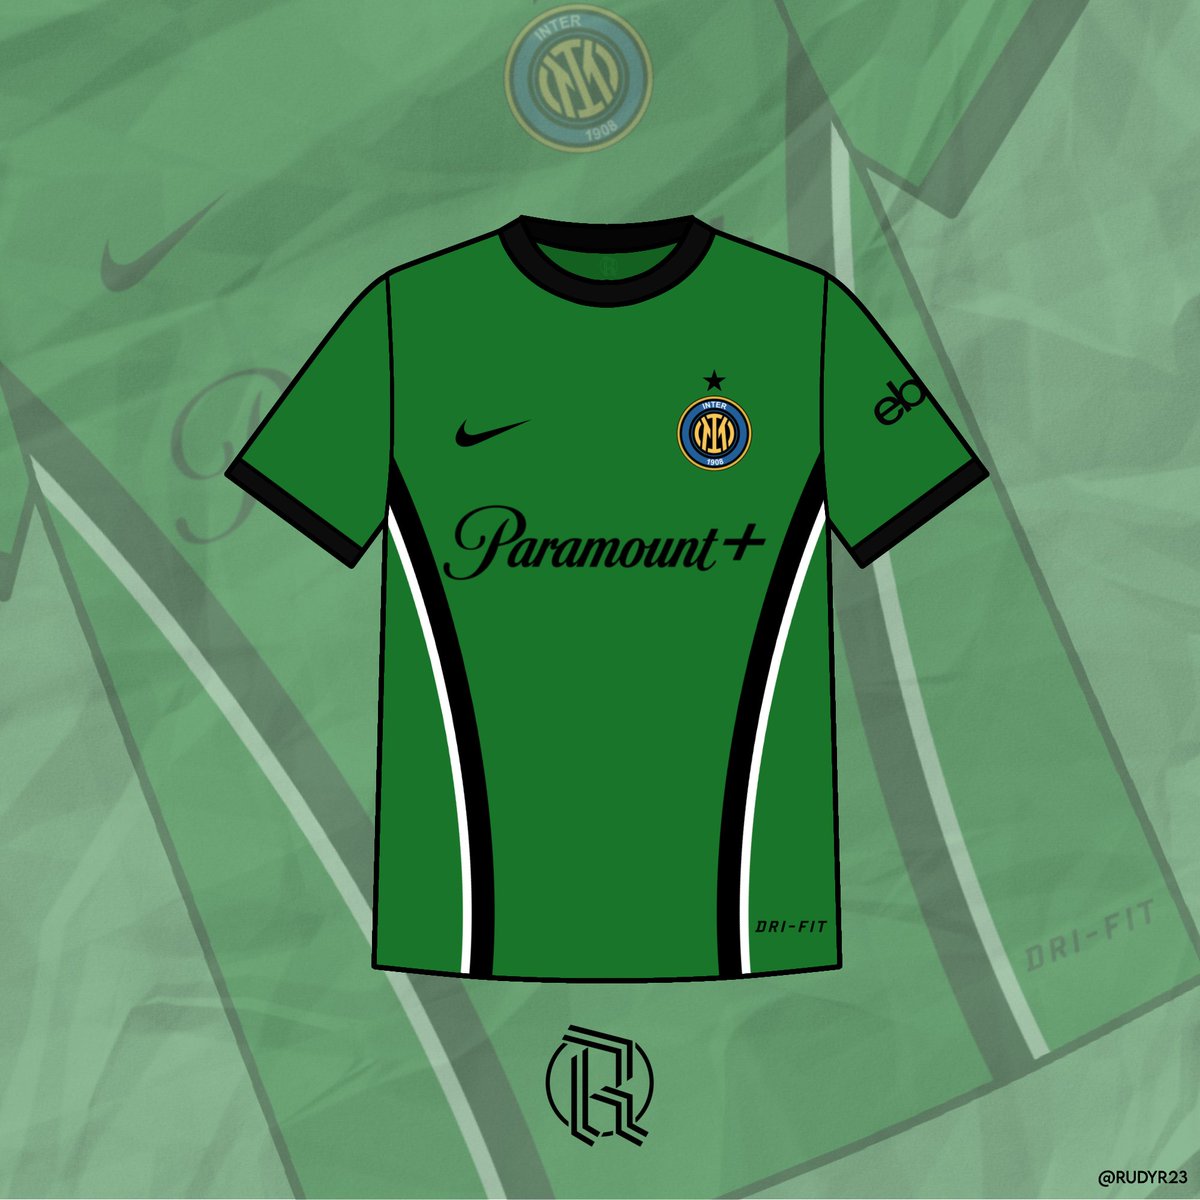 Inter 2024/25 Concept Kits

🟦 Home  ⬜ Away
🟨 Third  🟩 Goalkeeper

#Inter #ForzaInter #Internazionale #Biscione #SerieA #UCL #ConceptKit